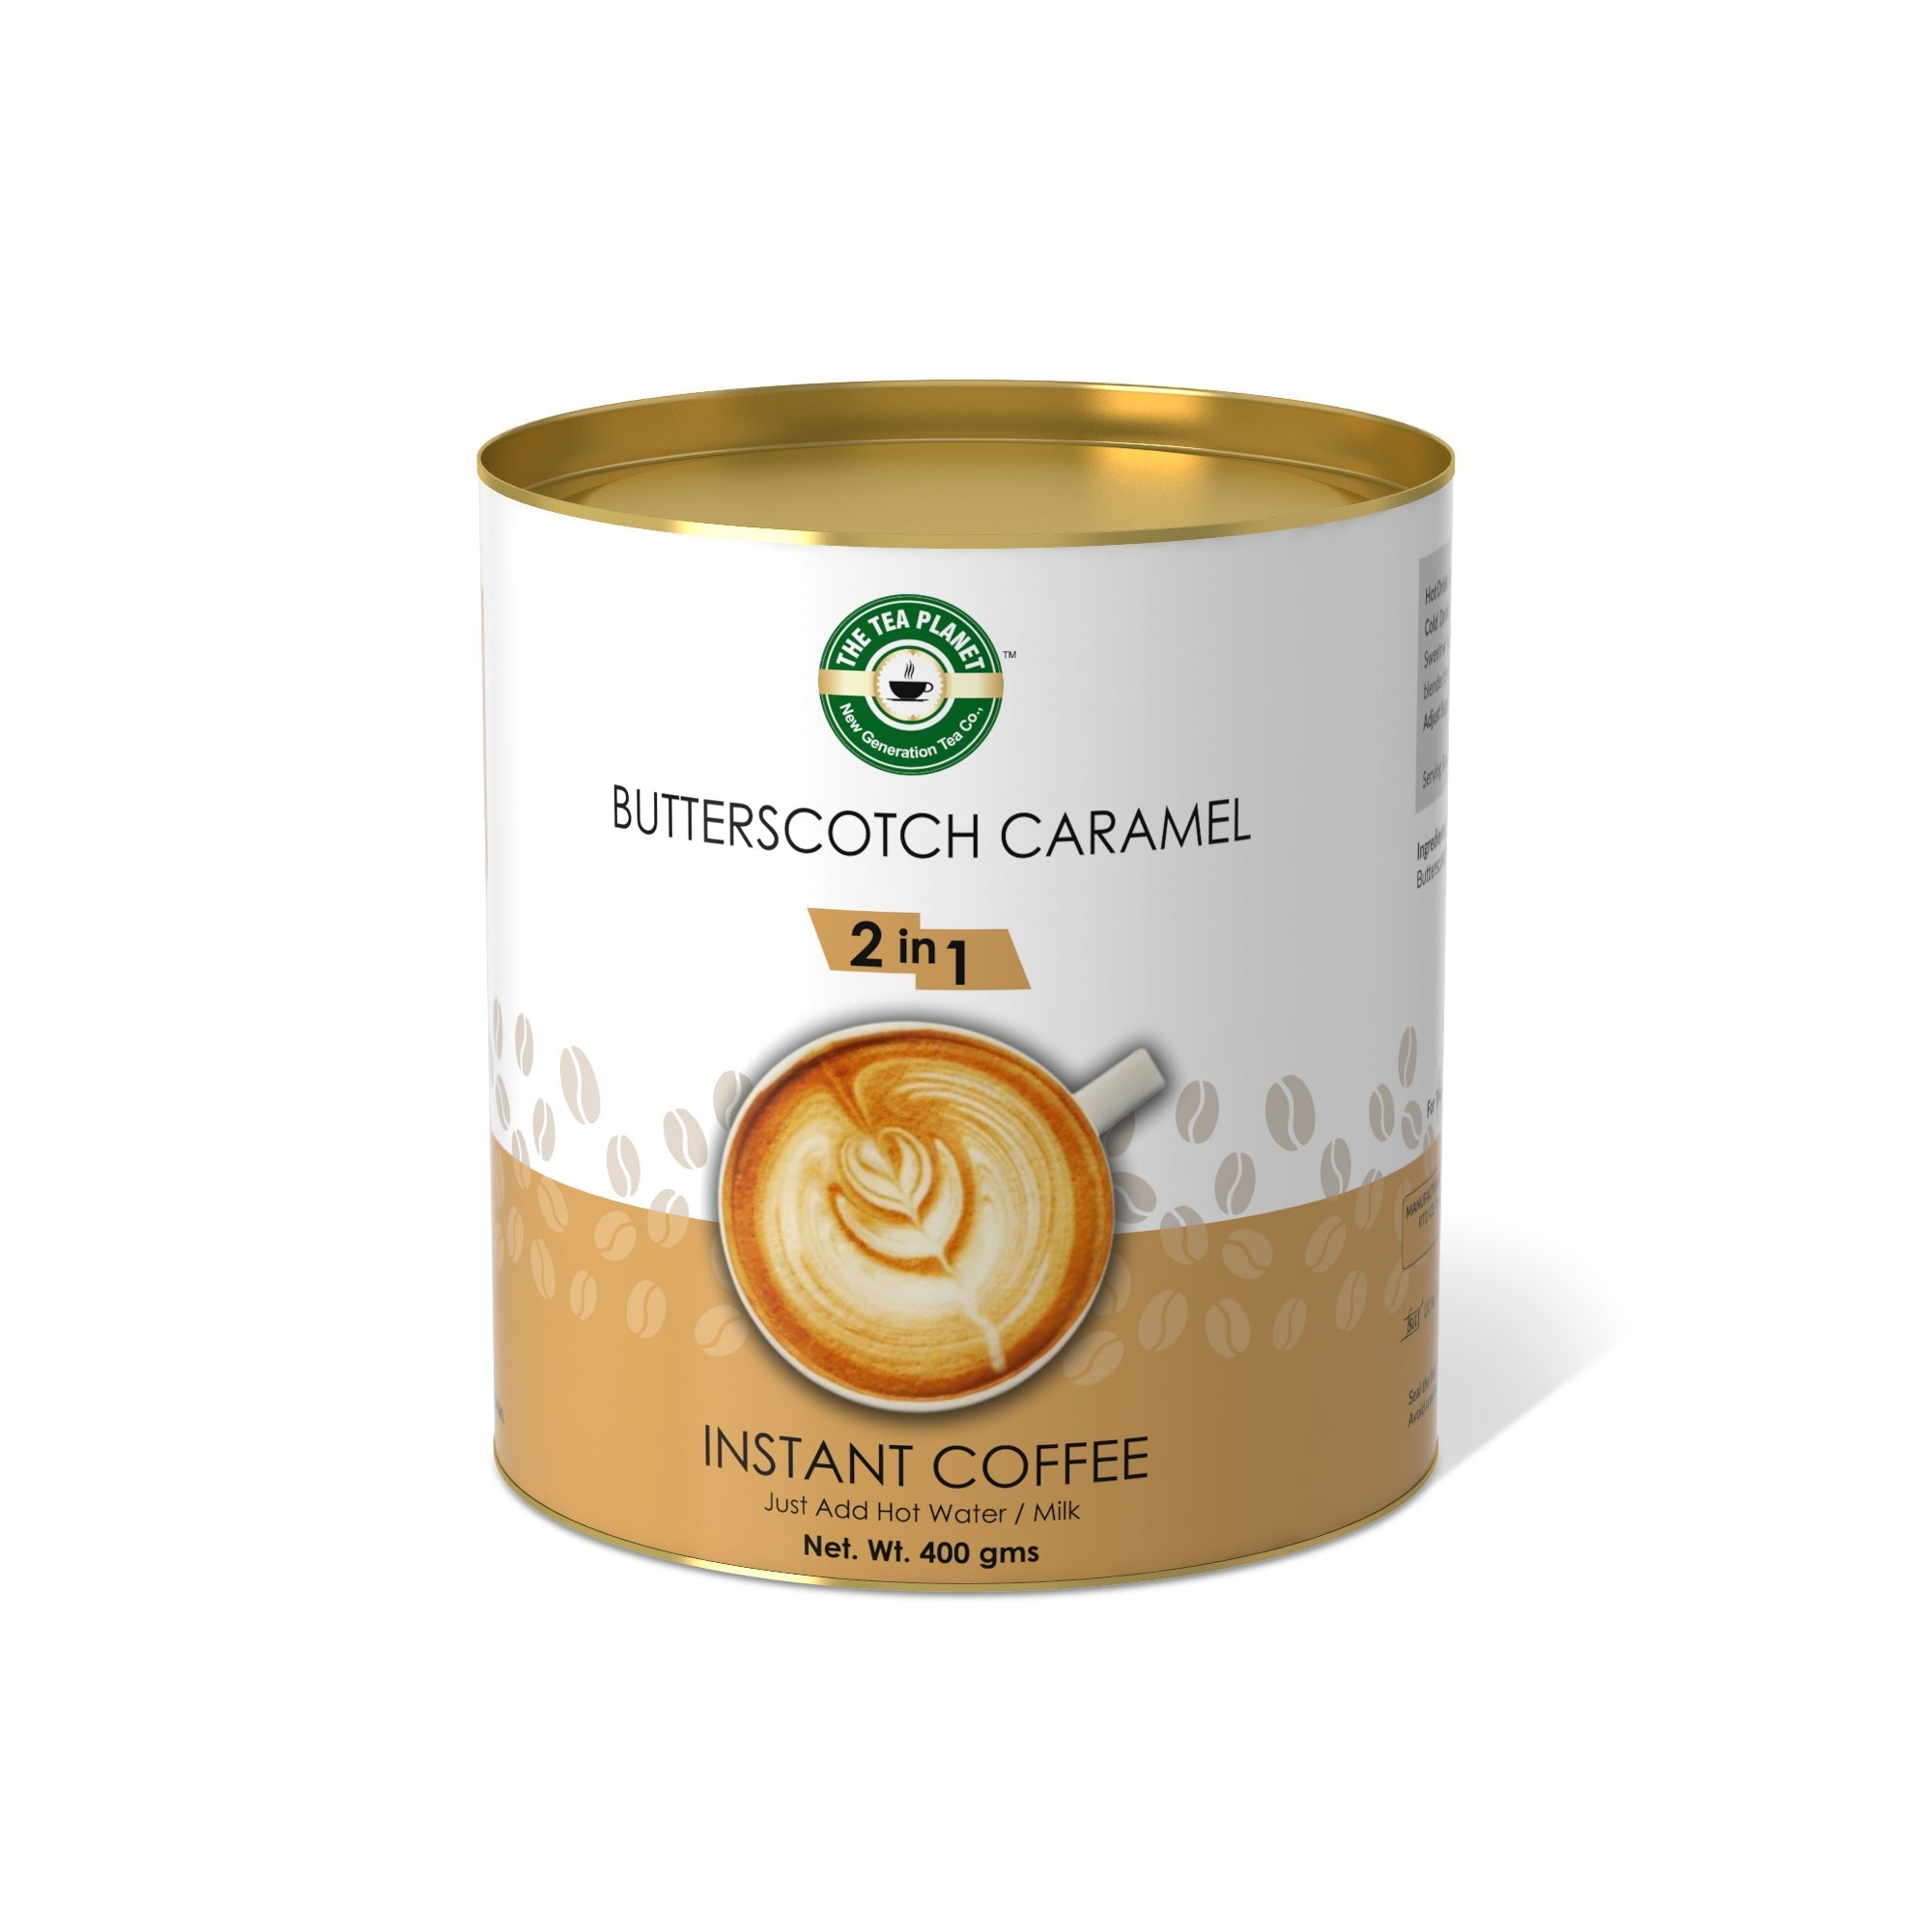 Butterscotch Caramel Instant Coffee Premix (2 in 1) - 400 gms